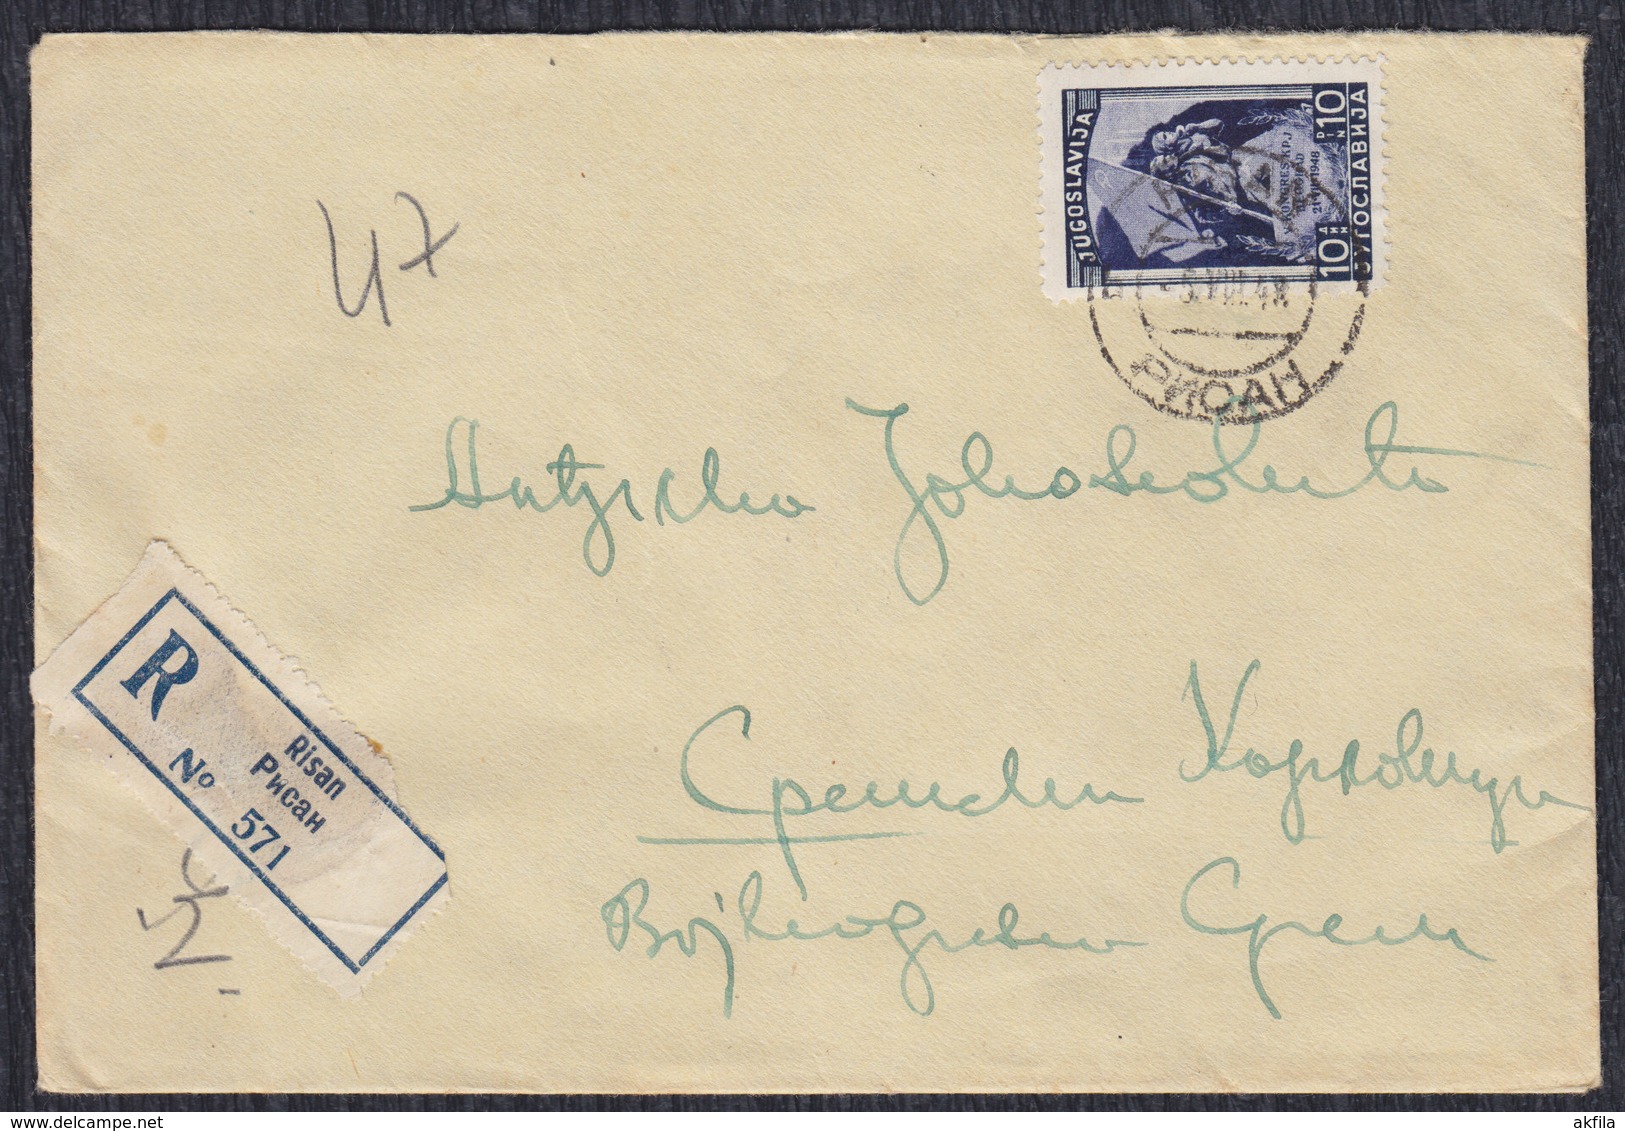 Yugoslavia 1948 Communist Party Congress, Recommended Letter Risan - Sremski Karlovci - Covers & Documents